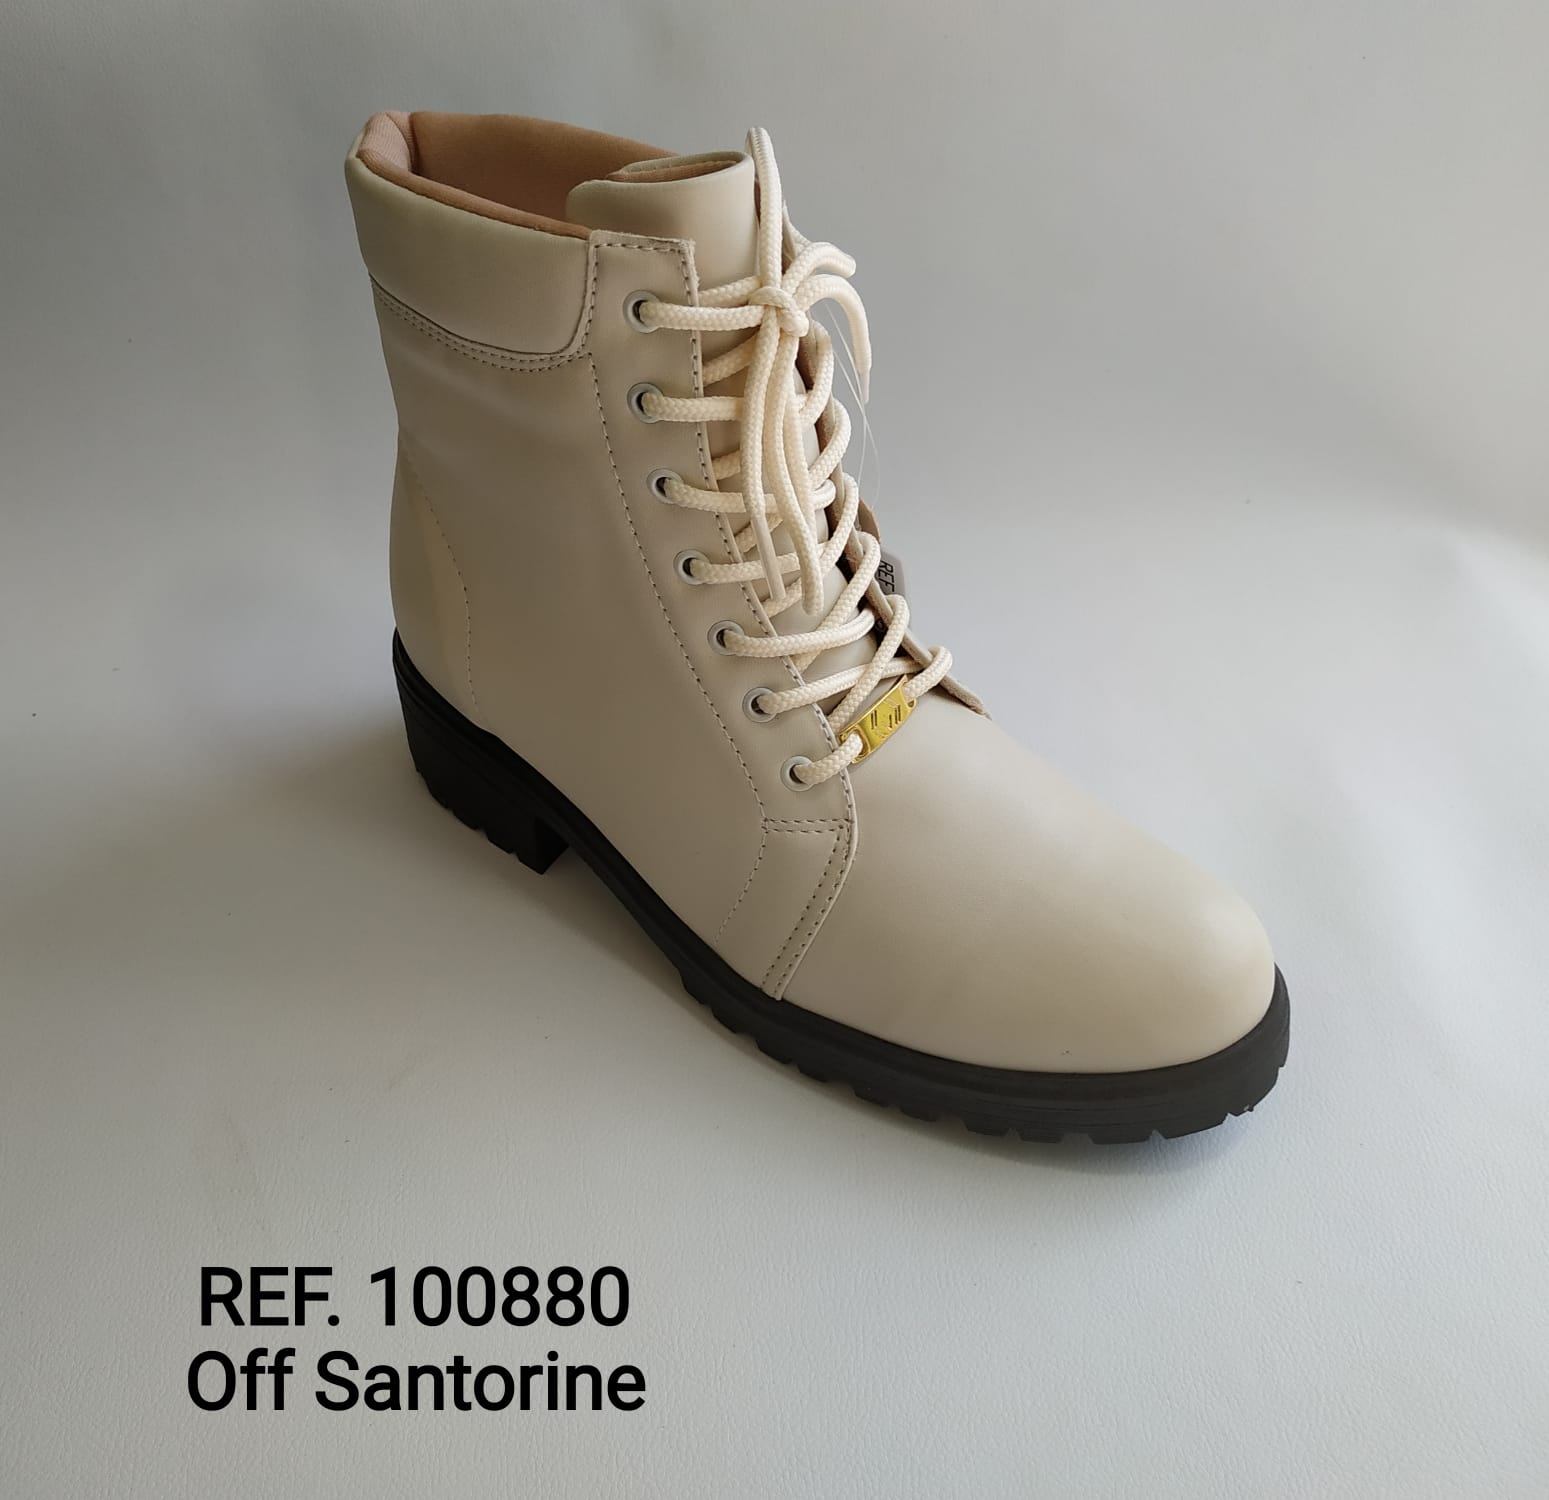 Ref. 100880 Off Santorine